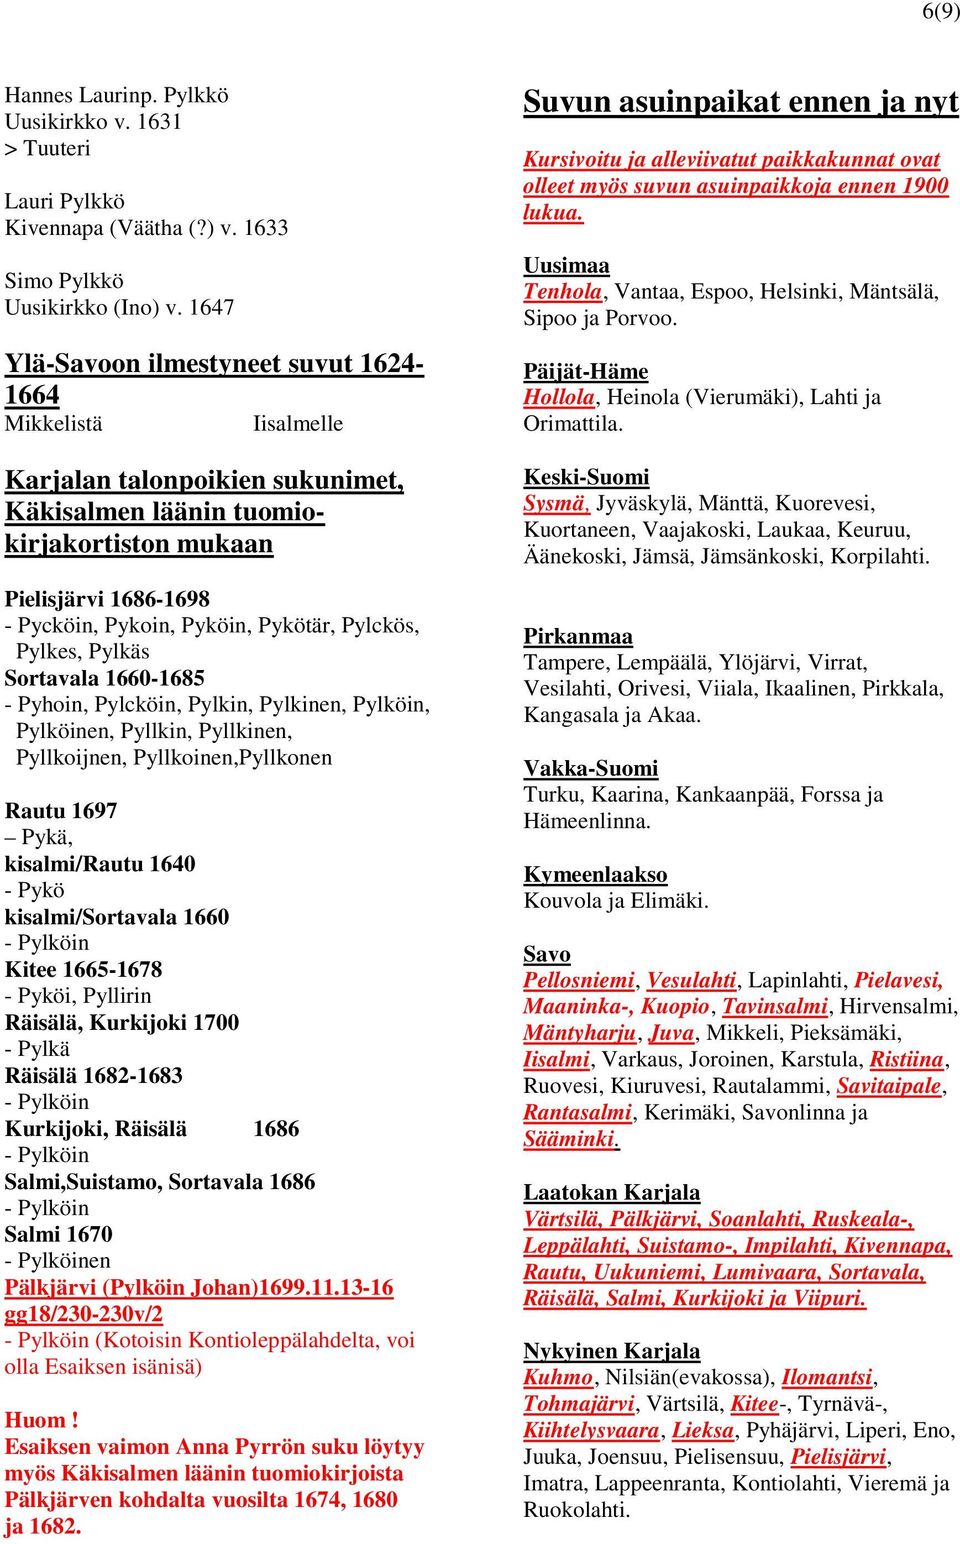 Pykötär, Pylckös, Pylkes, Pylkäs Sortavala 1660-1685 - Pyhoin, Pylcköin, Pylkin, Pylkinen, Pylköin, Pylköinen, Pyllkin, Pyllkinen, Pyllkoijnen, Pyllkoinen,Pyllkonen Rautu 1697 Pykä, kisalmi/rautu